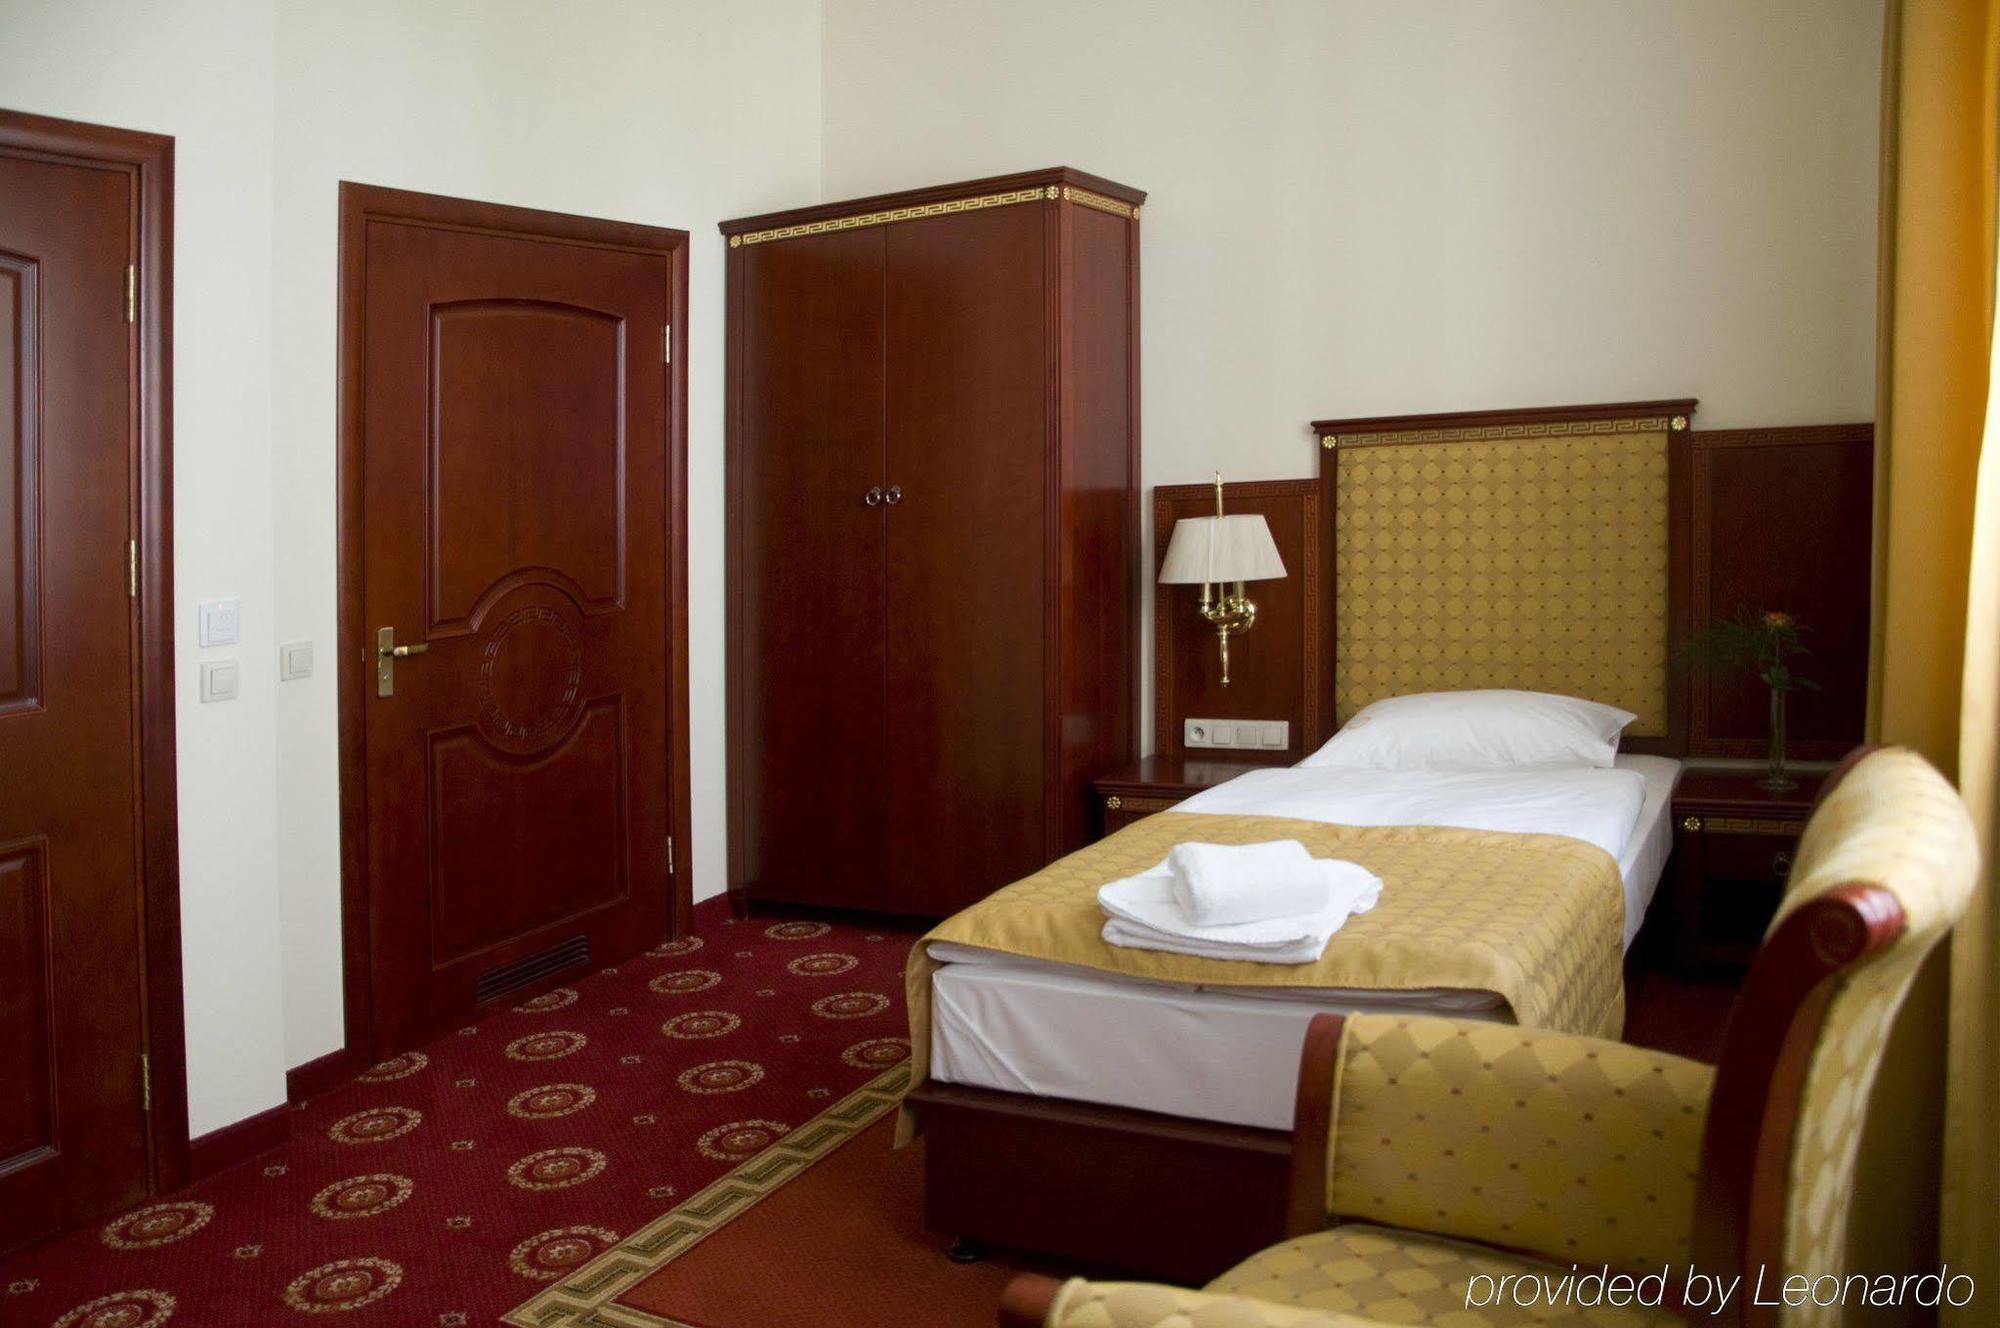 Hotel Holiday Park Warsaw Room photo